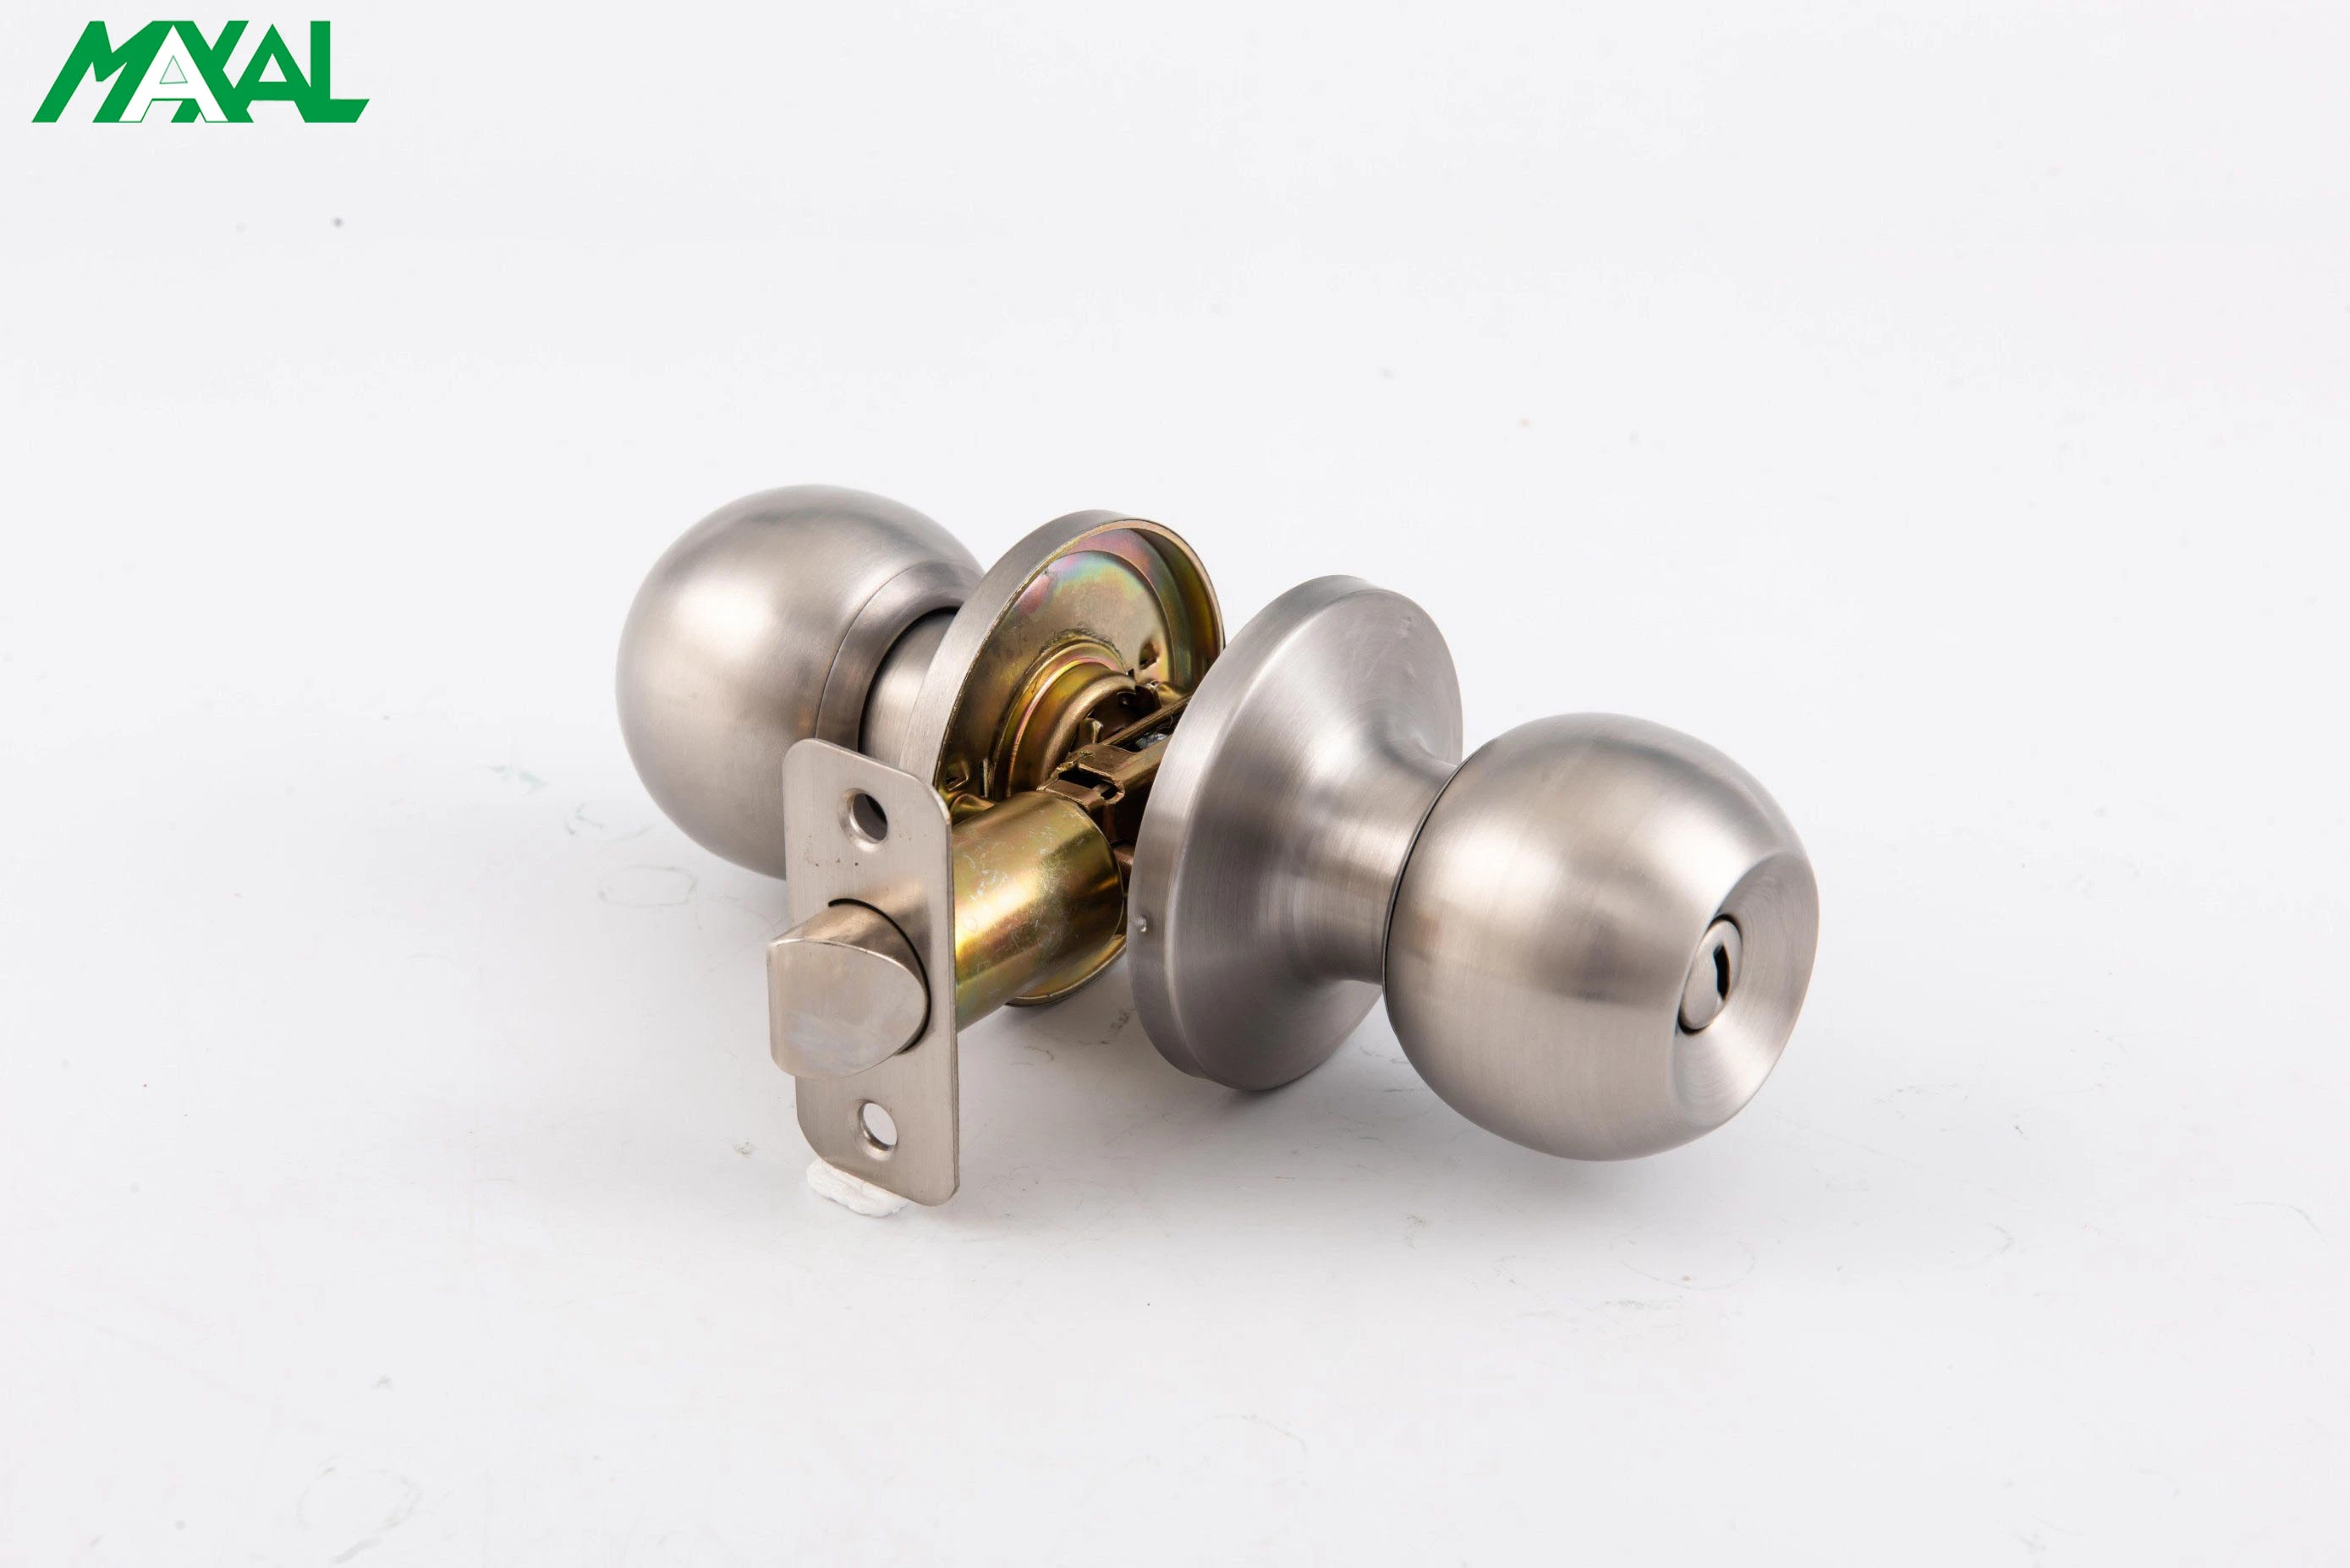 Maxal 201/304 Stainless Steel Satin Stainless Steel Privacy Function Tubular Ball Door Lock